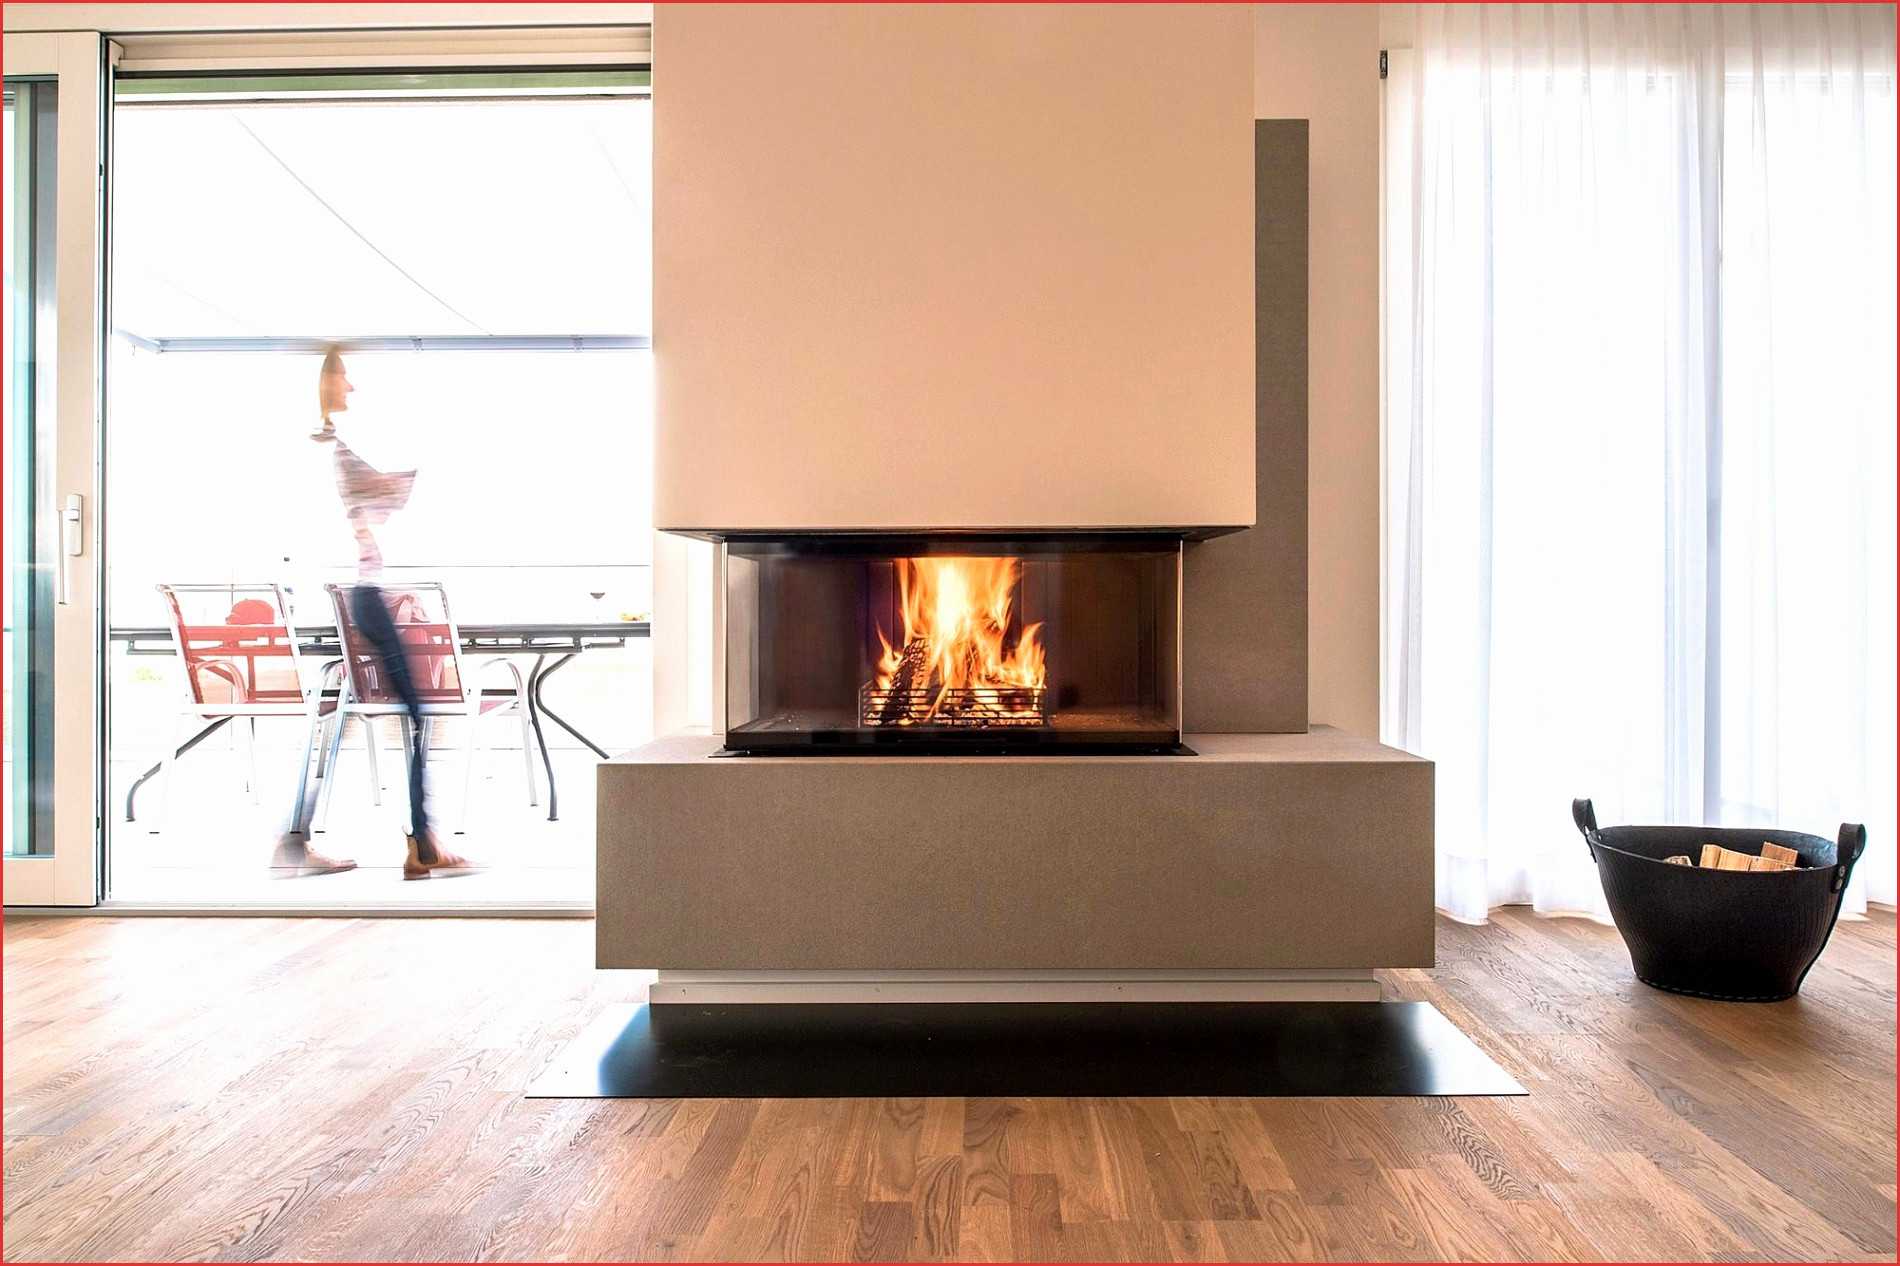 Fireplace Wood Frame Awesome Moderner Holzofen Luxus Kamin In Der Wand Frisch Moderne